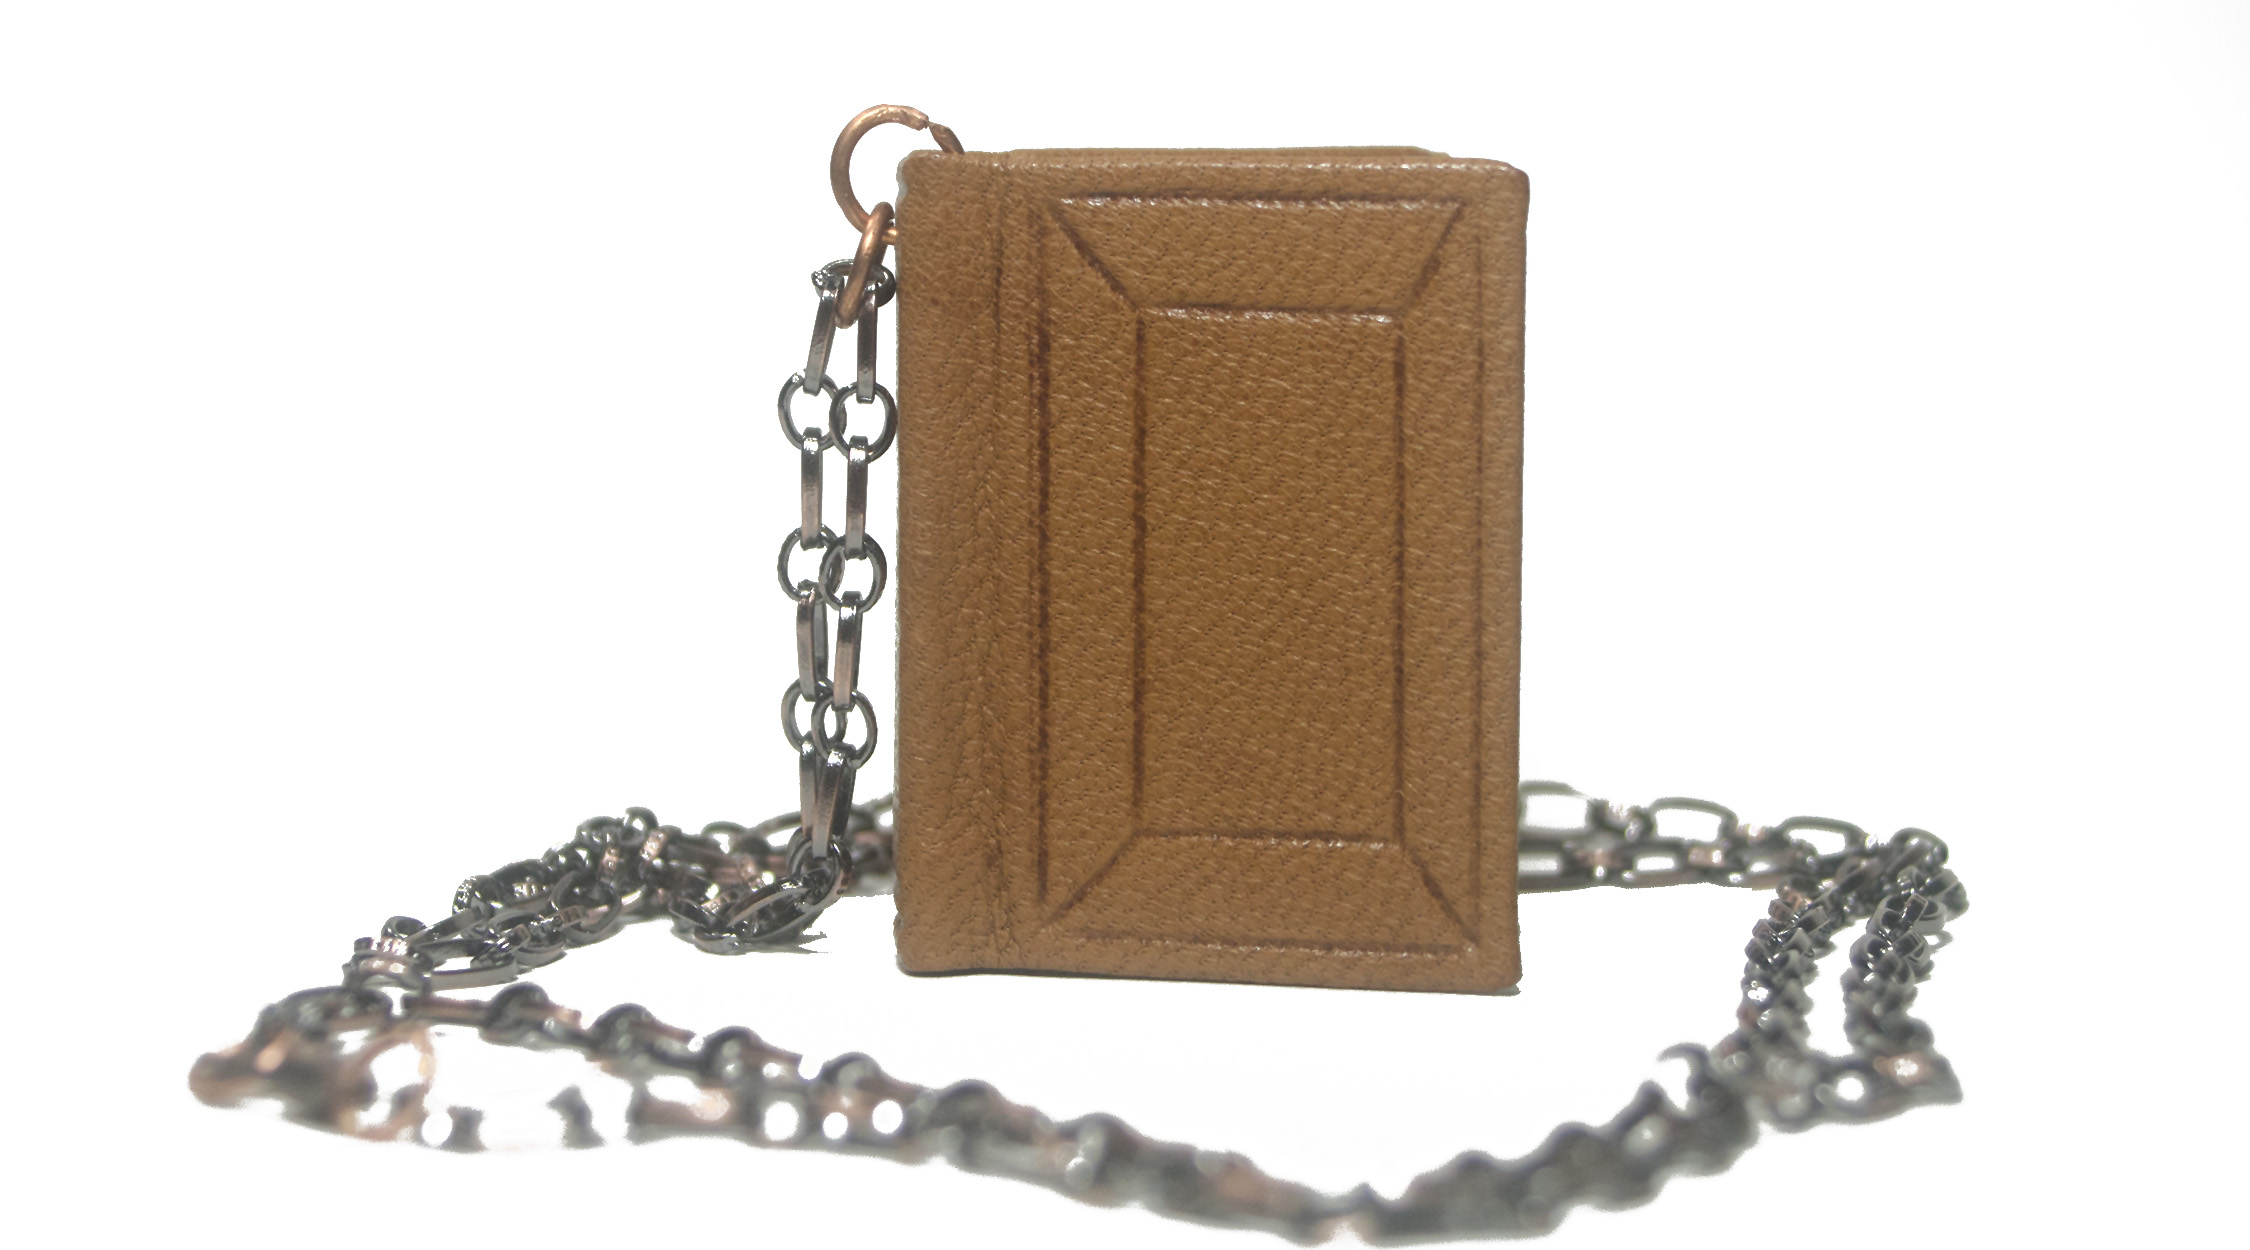 Handmade leather book pendant necklace